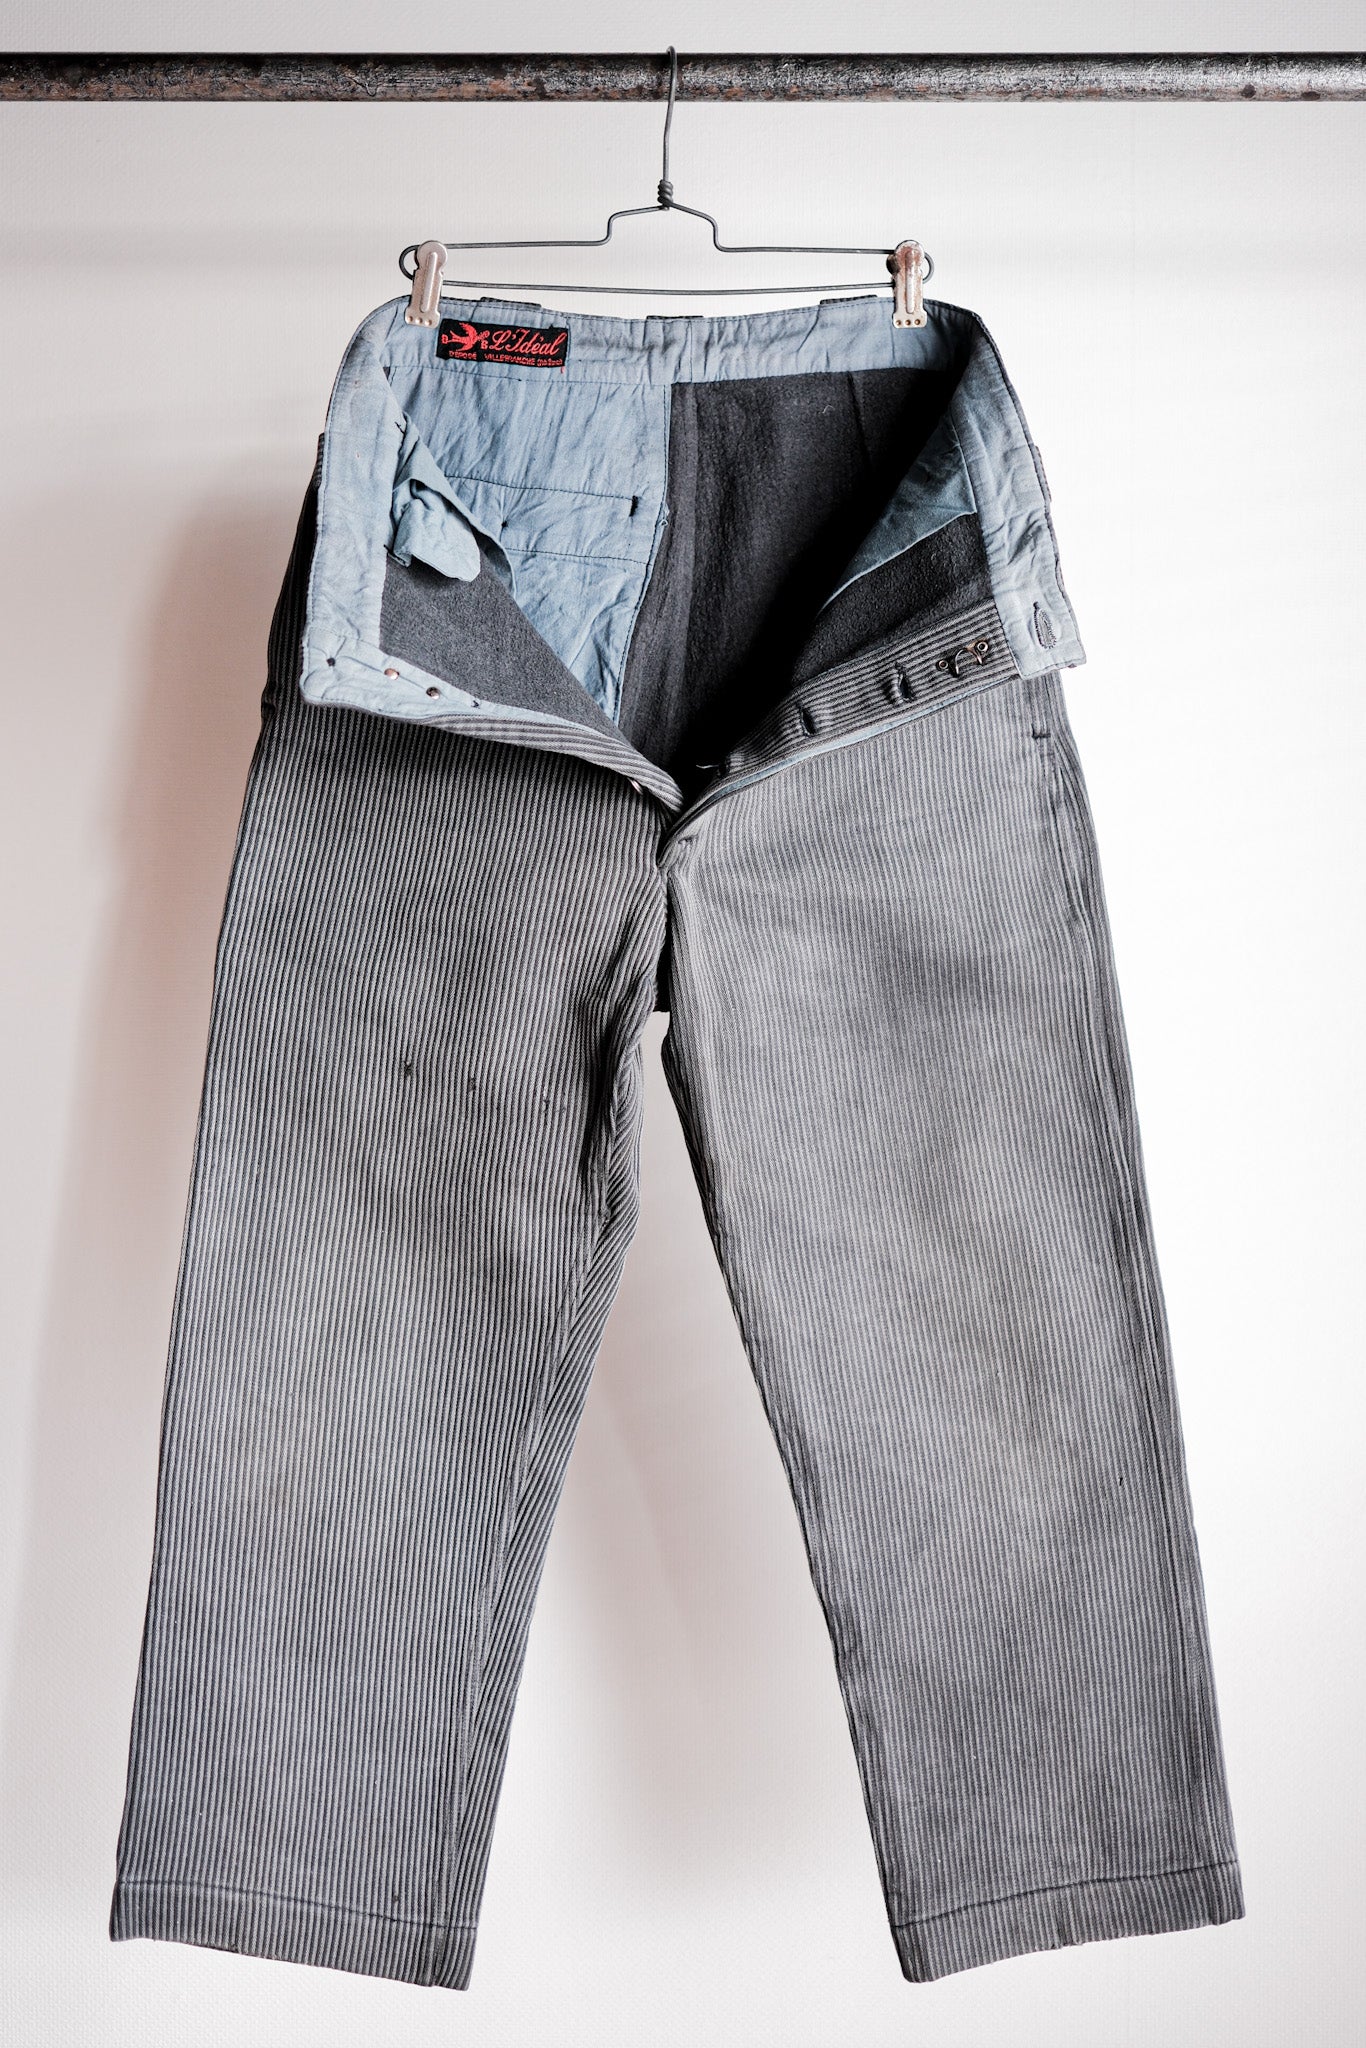 [~ 50's] กางเกงทำงานของ French Vinton Pique